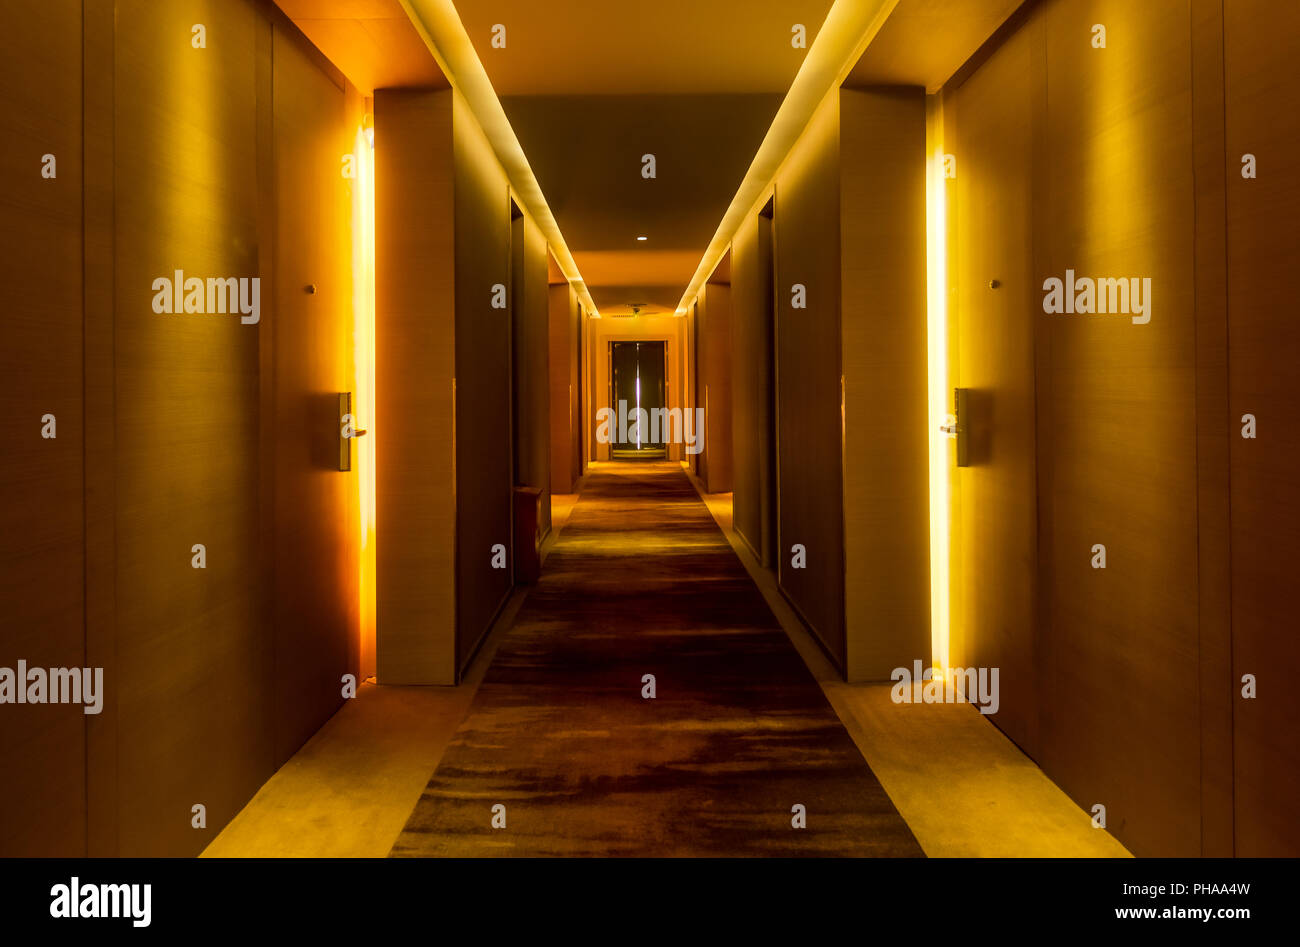 Hotel Corridor Ambient Lighting Contemporary Interior Design Stock Photo